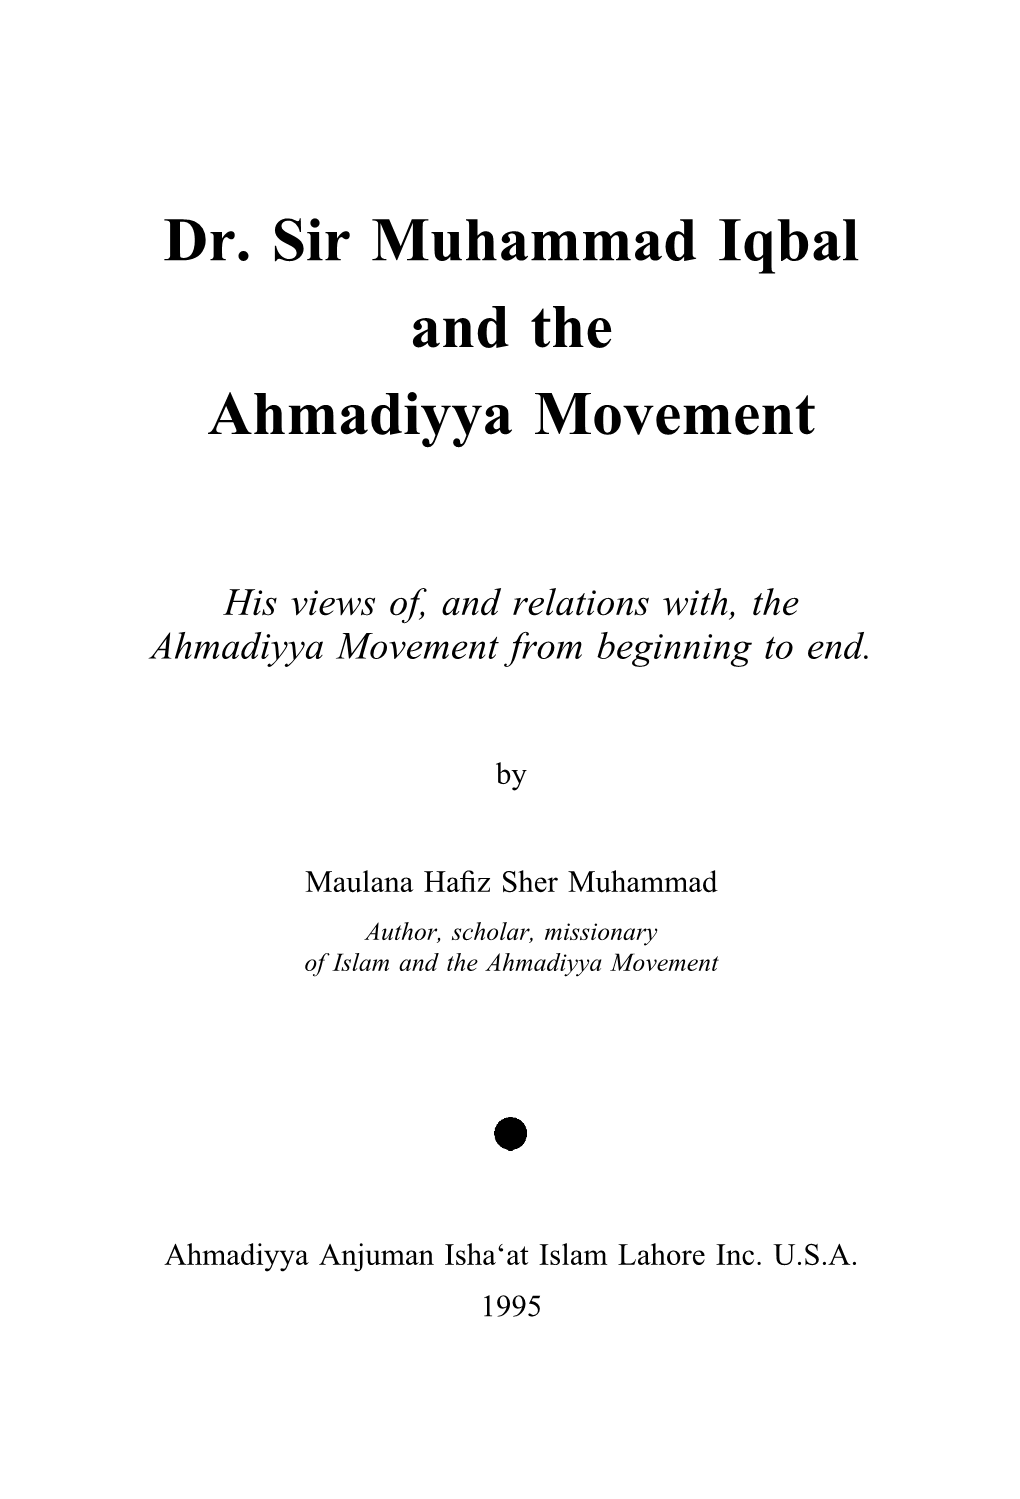 Dr. Sir Muhammad Iqbal and the Ahmadiyya Movement